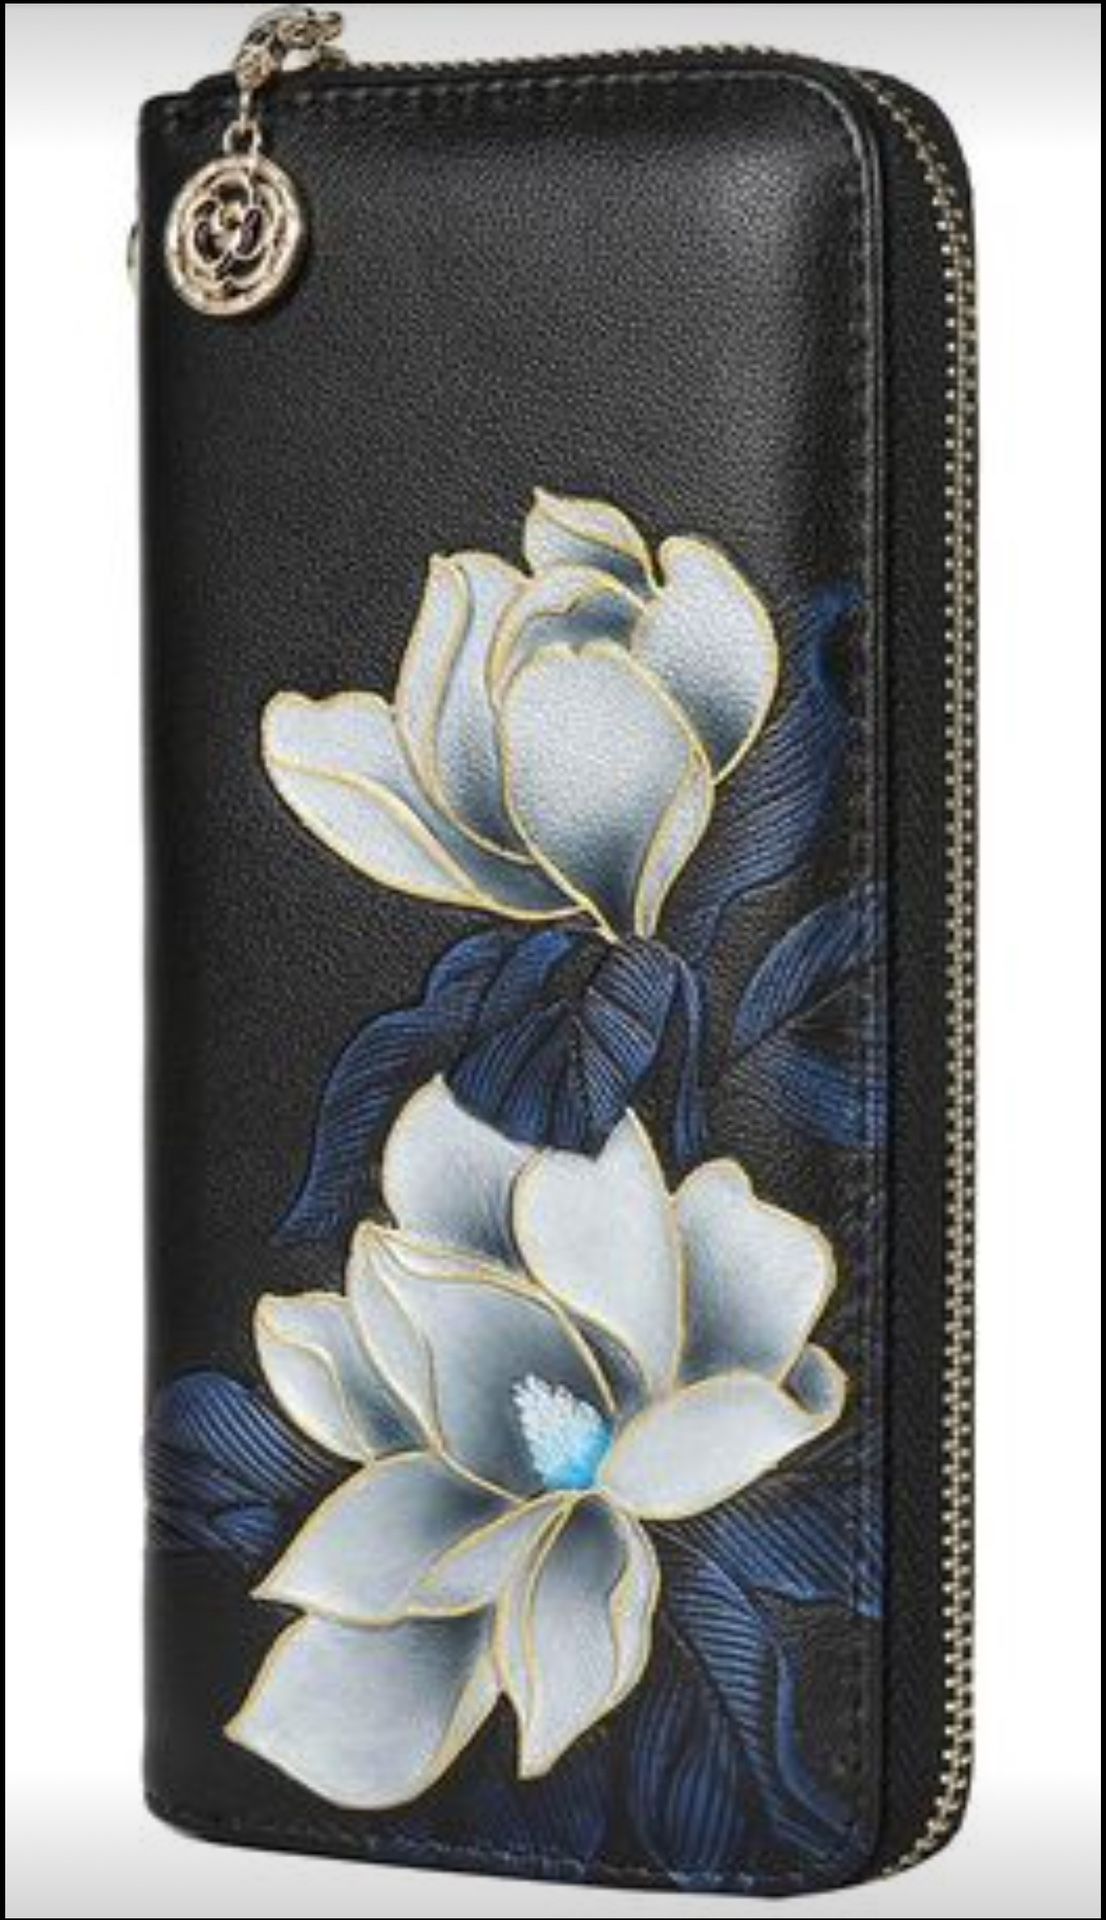 Brandnew Leather Wristlet Wallets for Women, Fashion Wristlet Purses, Women’s Handbag, Slim Leather Credit Card wallet for Ladies